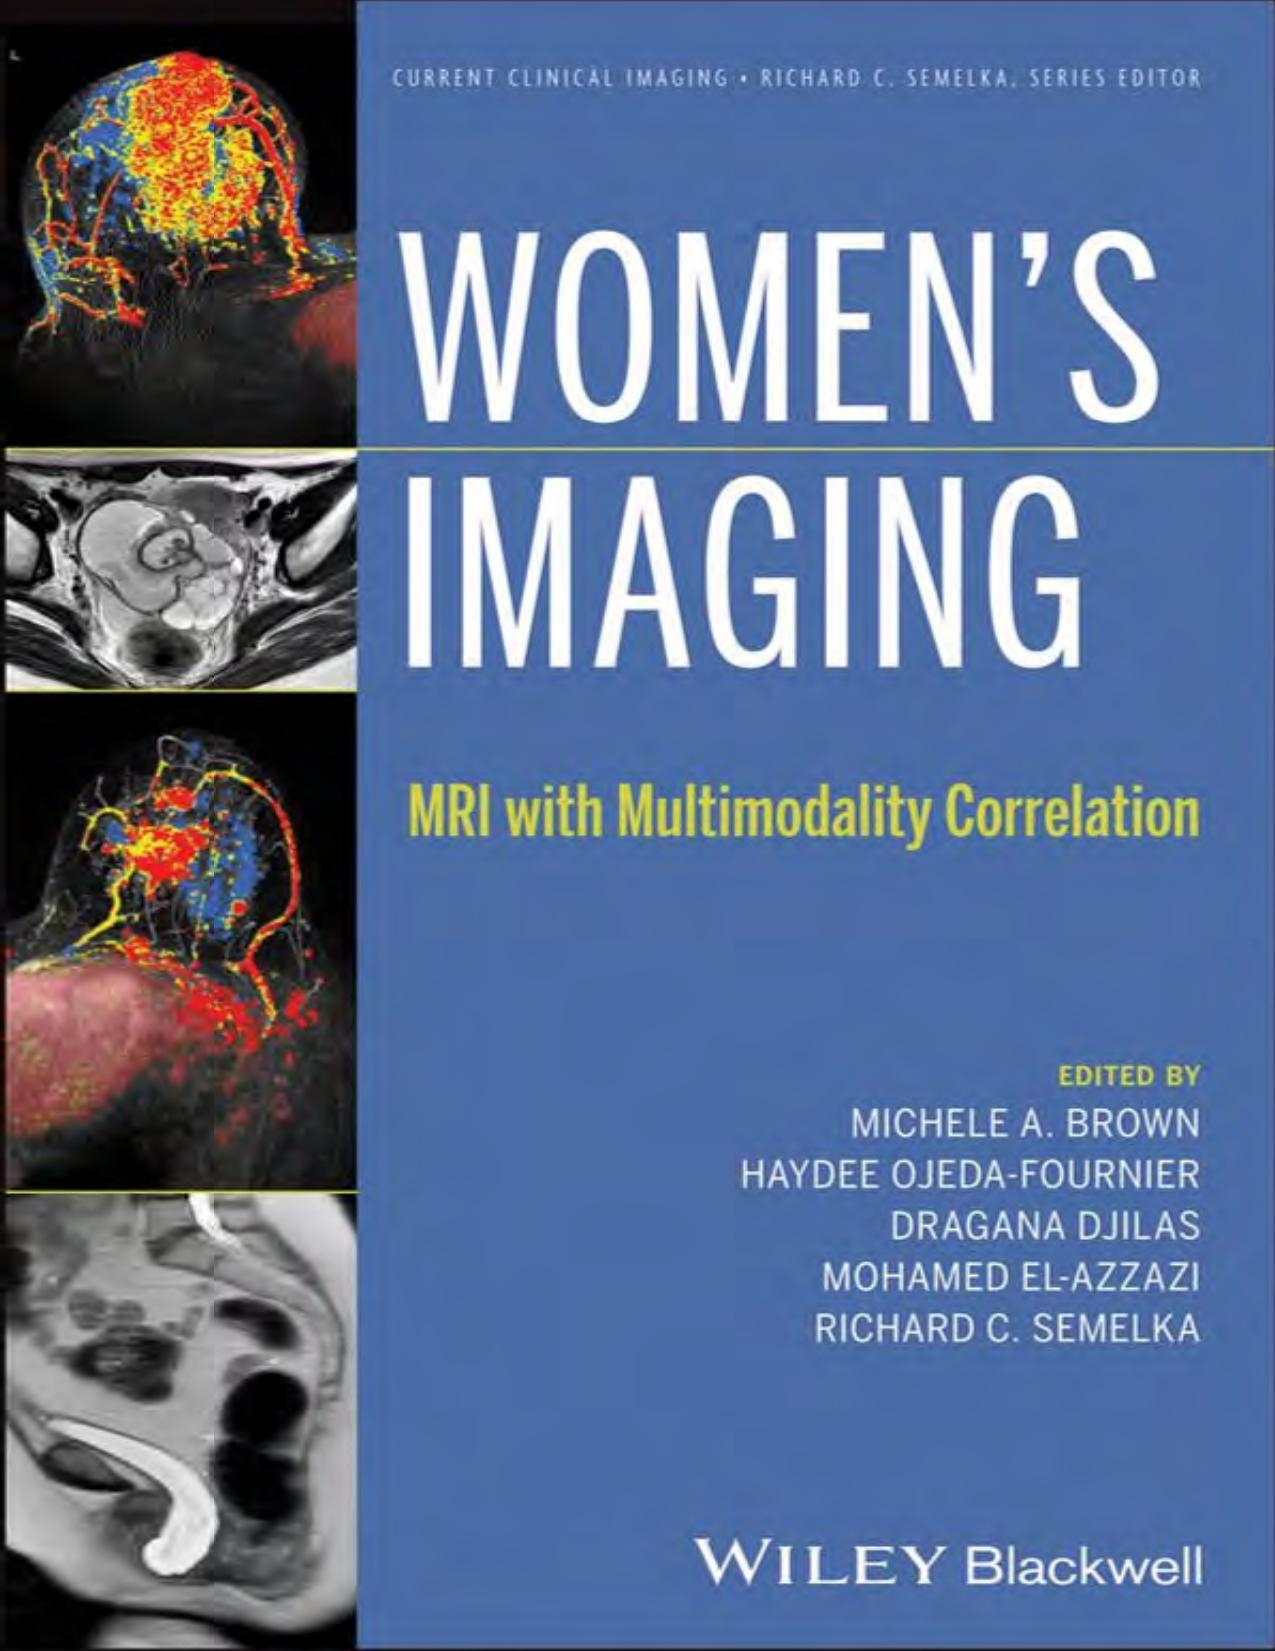 Women's Imaging_ MRI with Multimodality Correlation - Michele A. Brown, Haydee Ojeda-Fournier, Dragana Djilas, Mohamed El-Azzazi, Richard C. Semelka.jpg